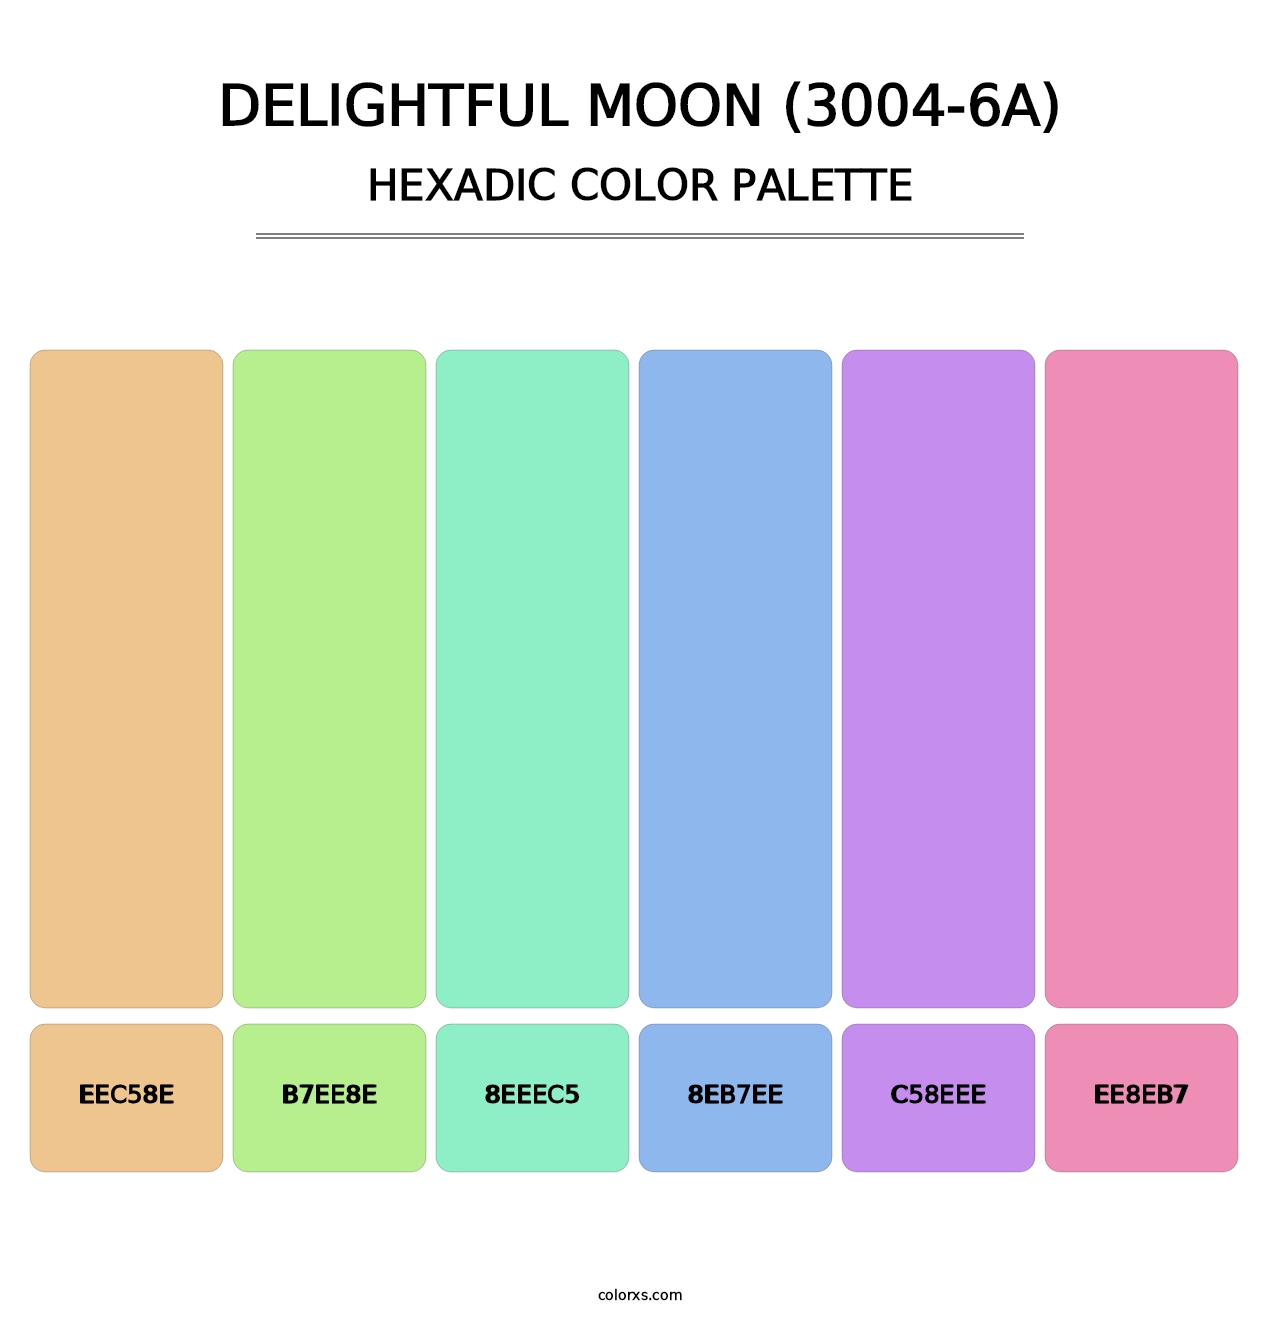 Delightful Moon (3004-6A) - Hexadic Color Palette